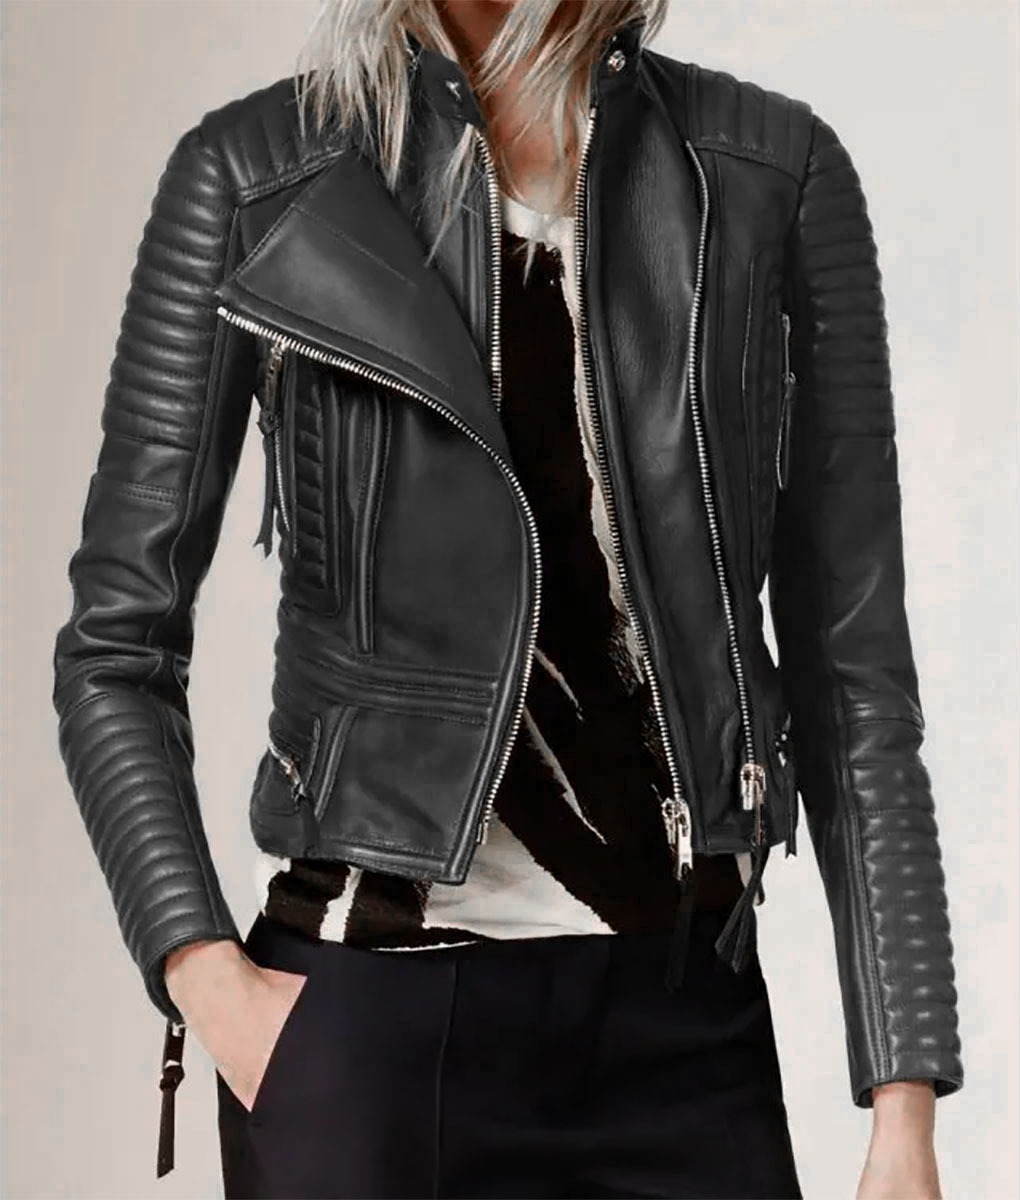 Women’s Black Leather Crop Jacket